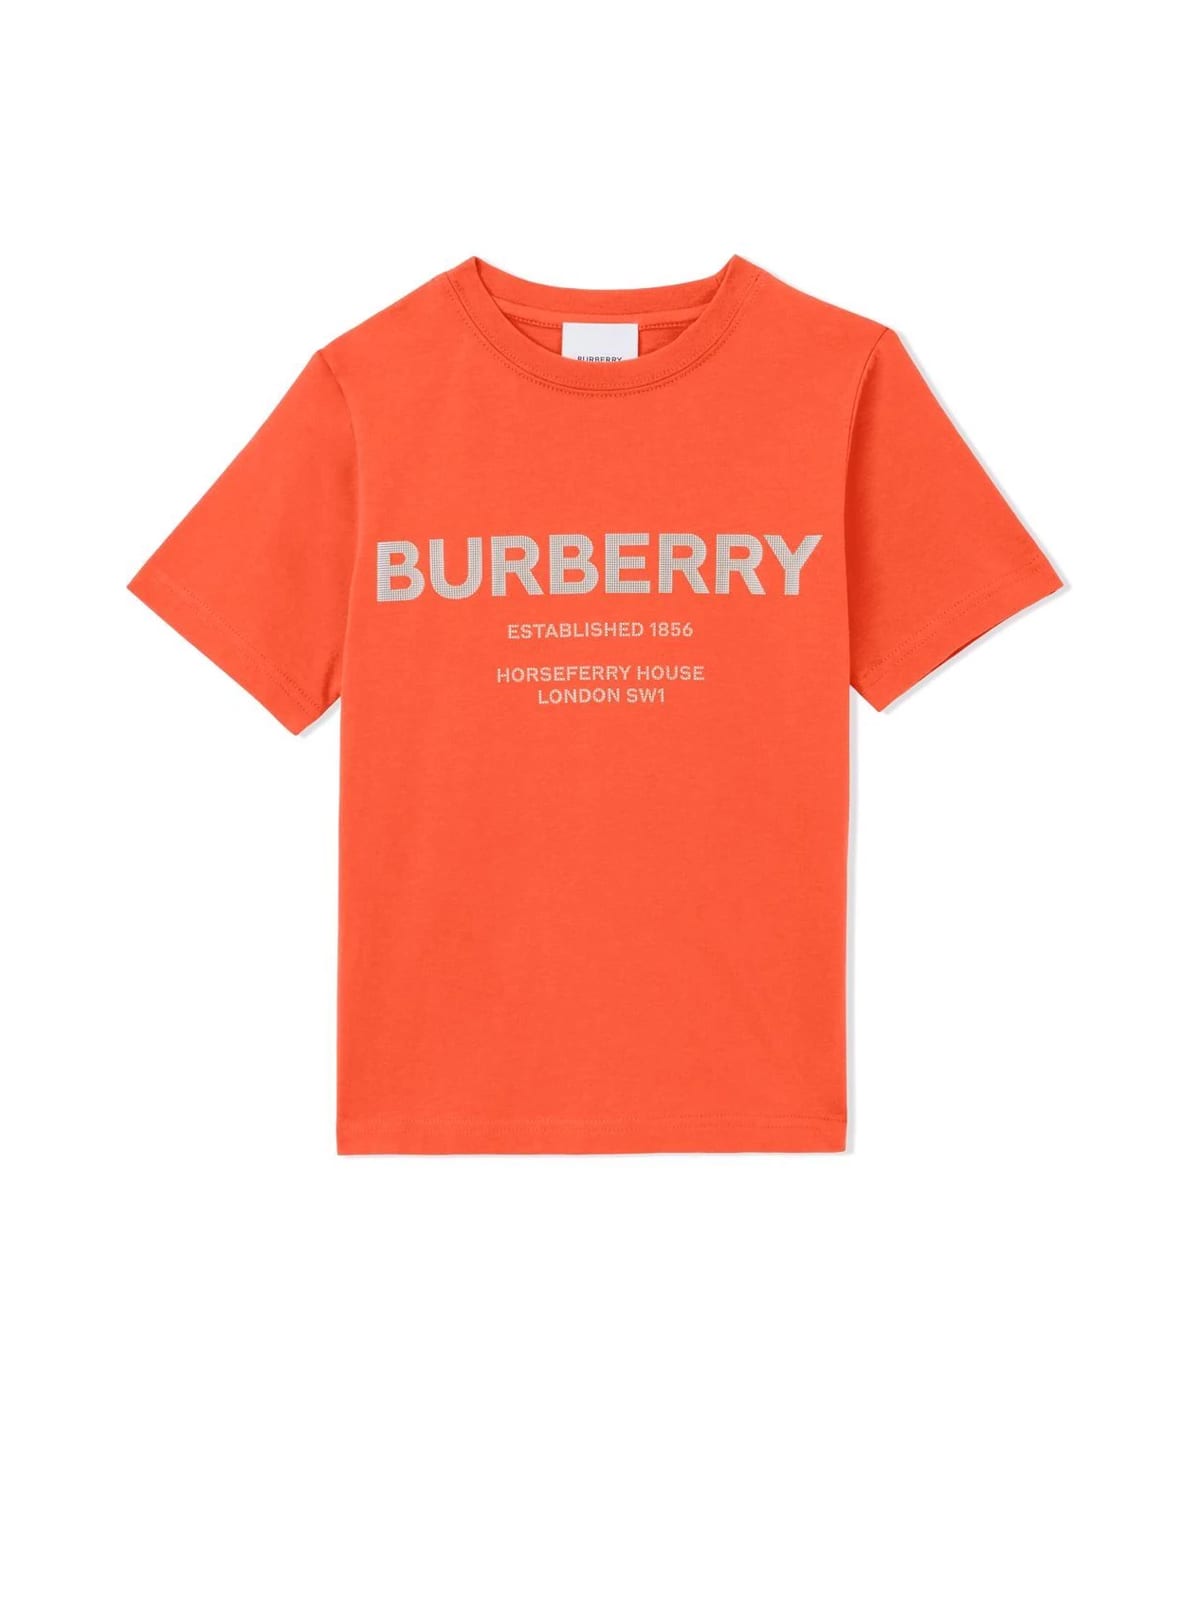 Burberry Bristol Tee Cg Jerseywear